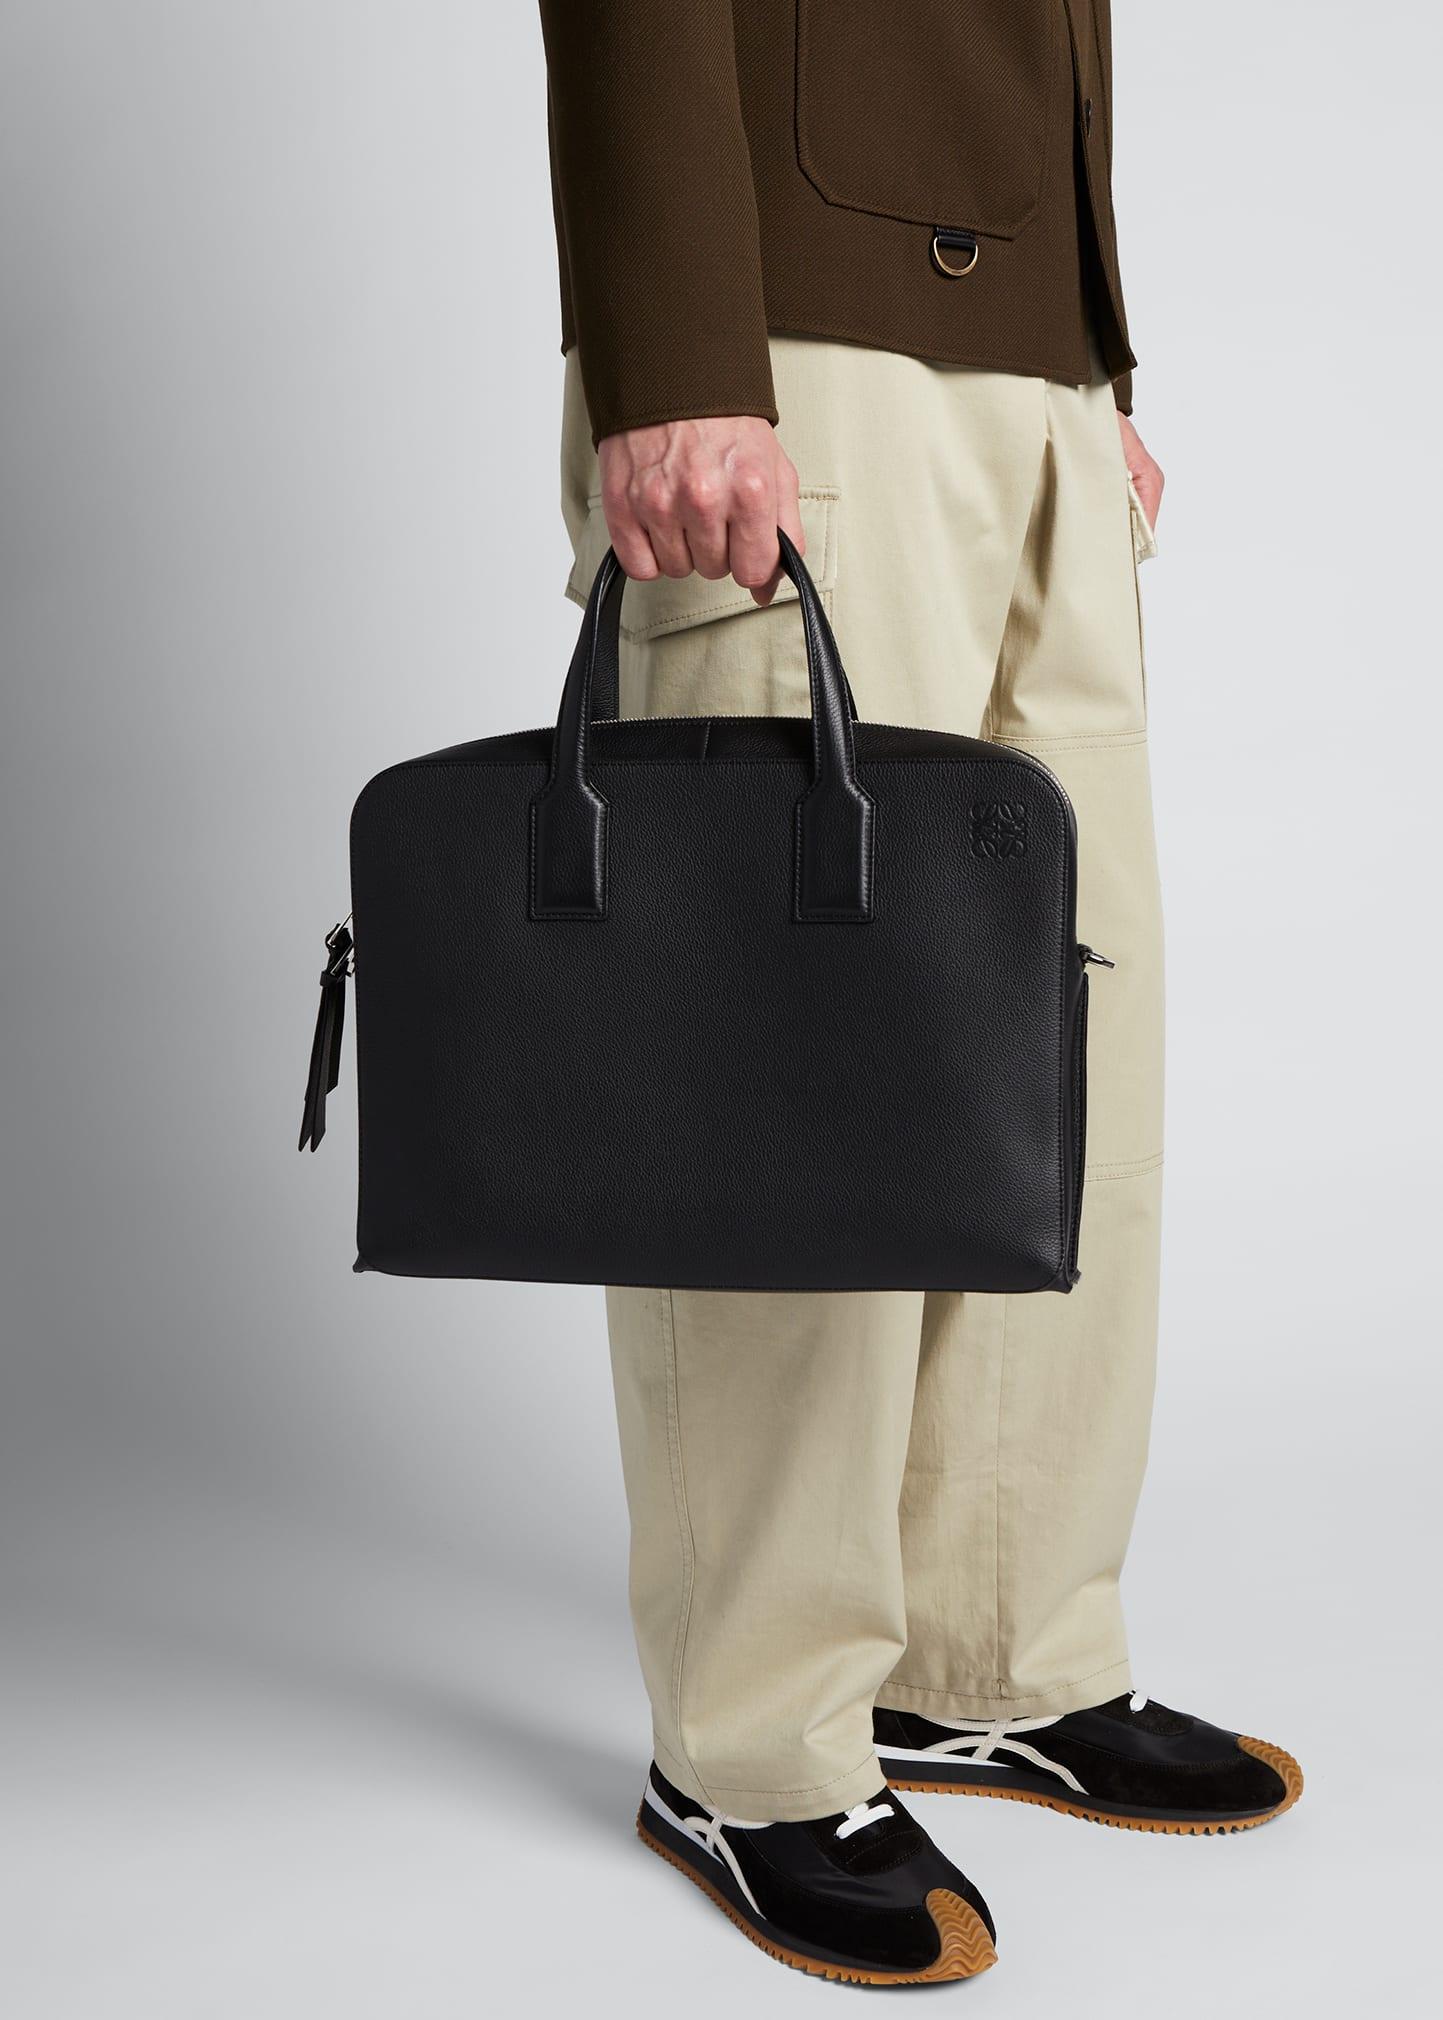 Loewe Goya Thin Leather Briefcase Bag in Black for Men